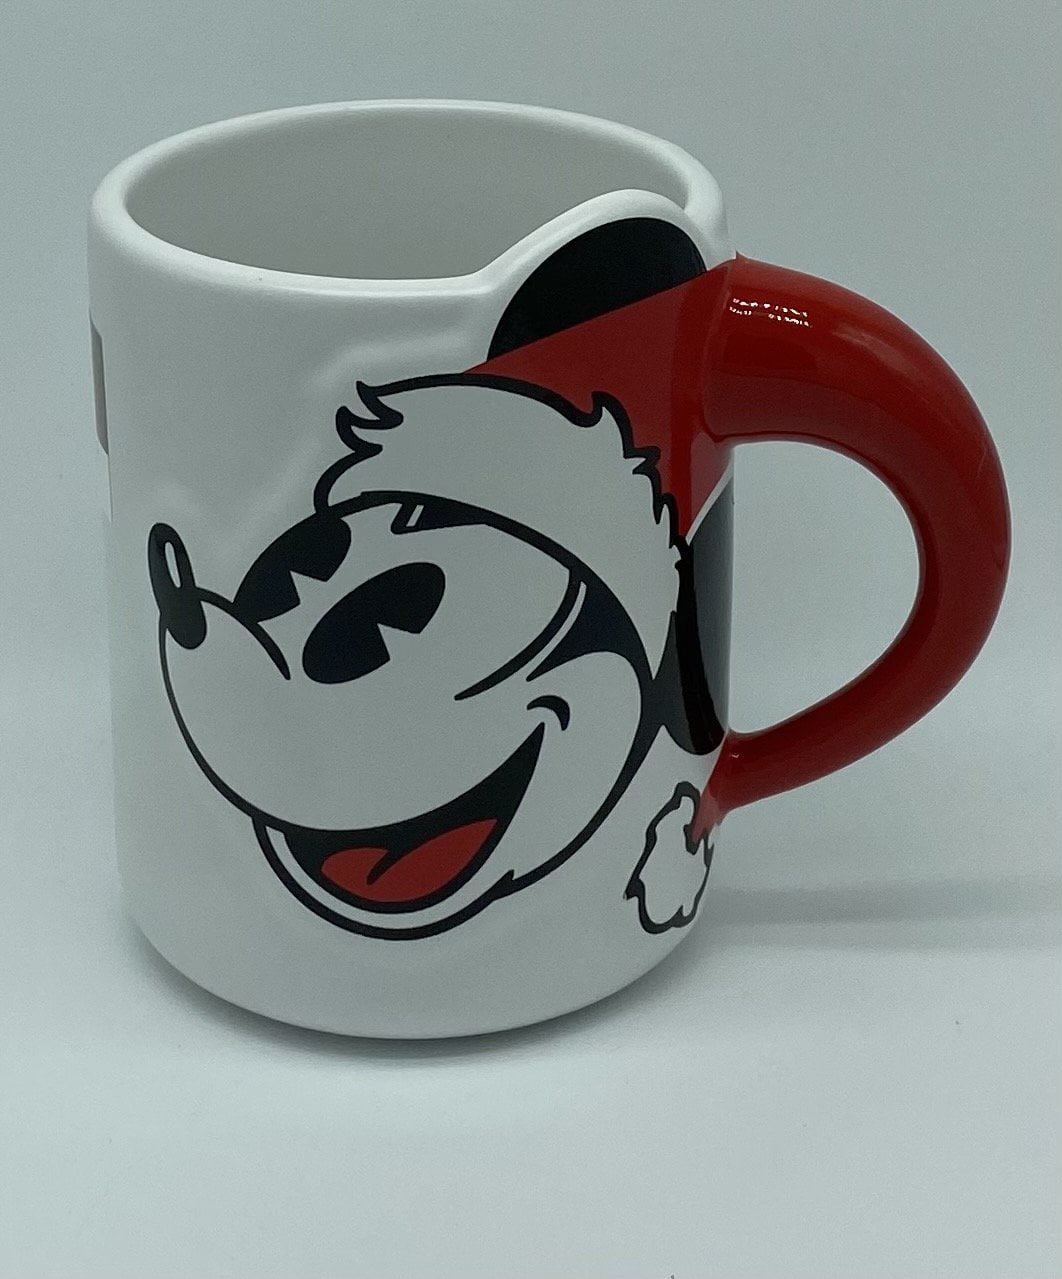 Disney Mickey Mouse & Friends Do Good Bring Friends Mug, 15 oz. – Navita's  Hallmark